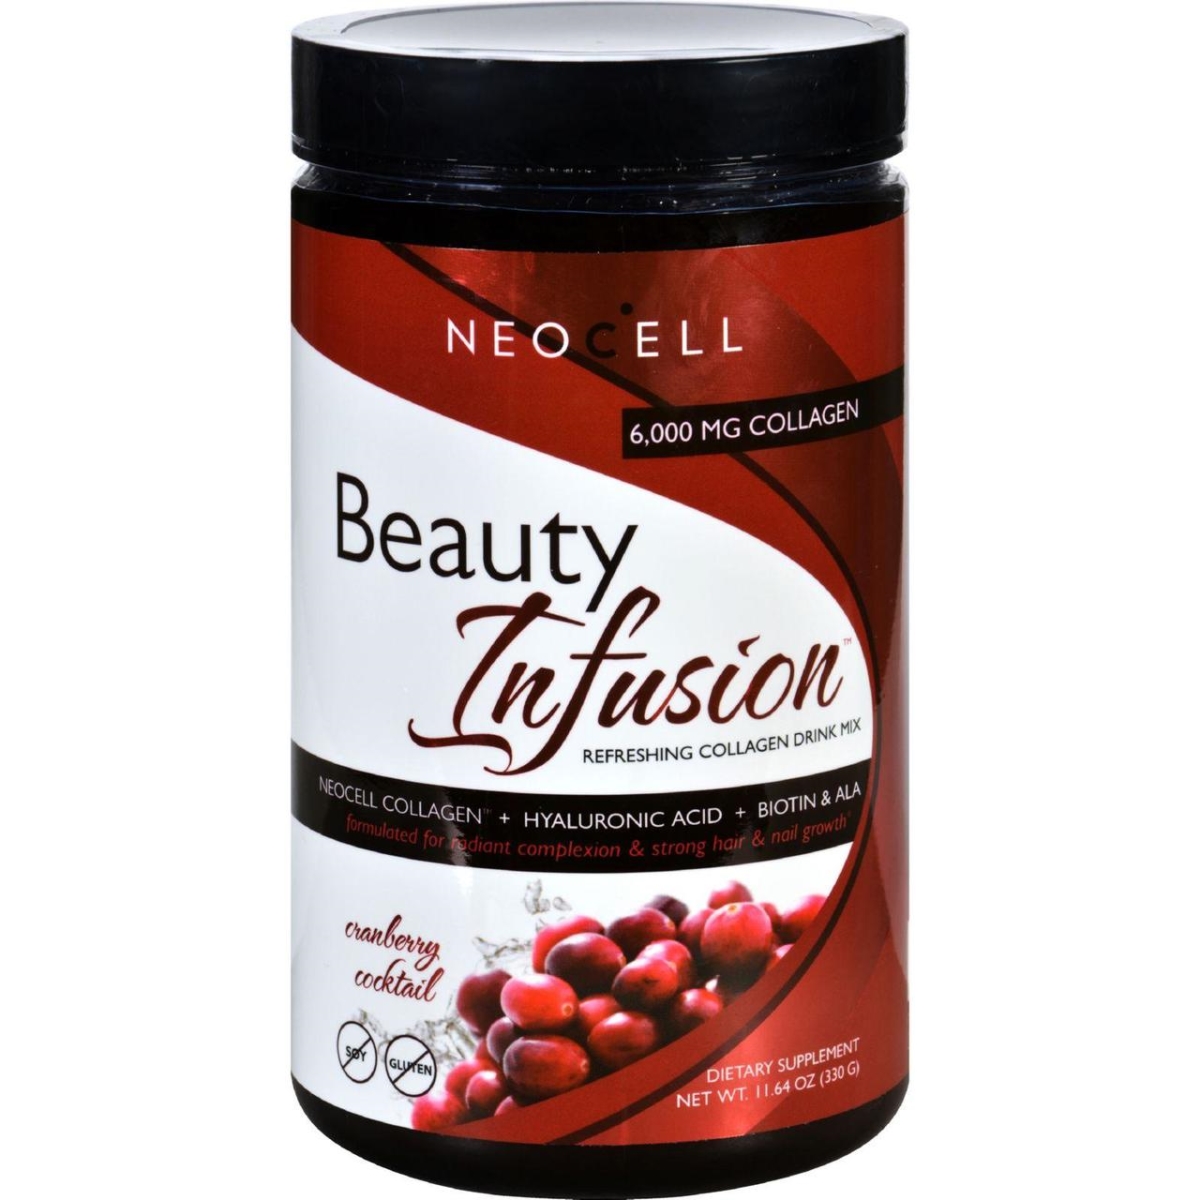 Hg1641422 11.64 Oz Collagen Drink Mix Beauty Infusion, Cranberry Splash